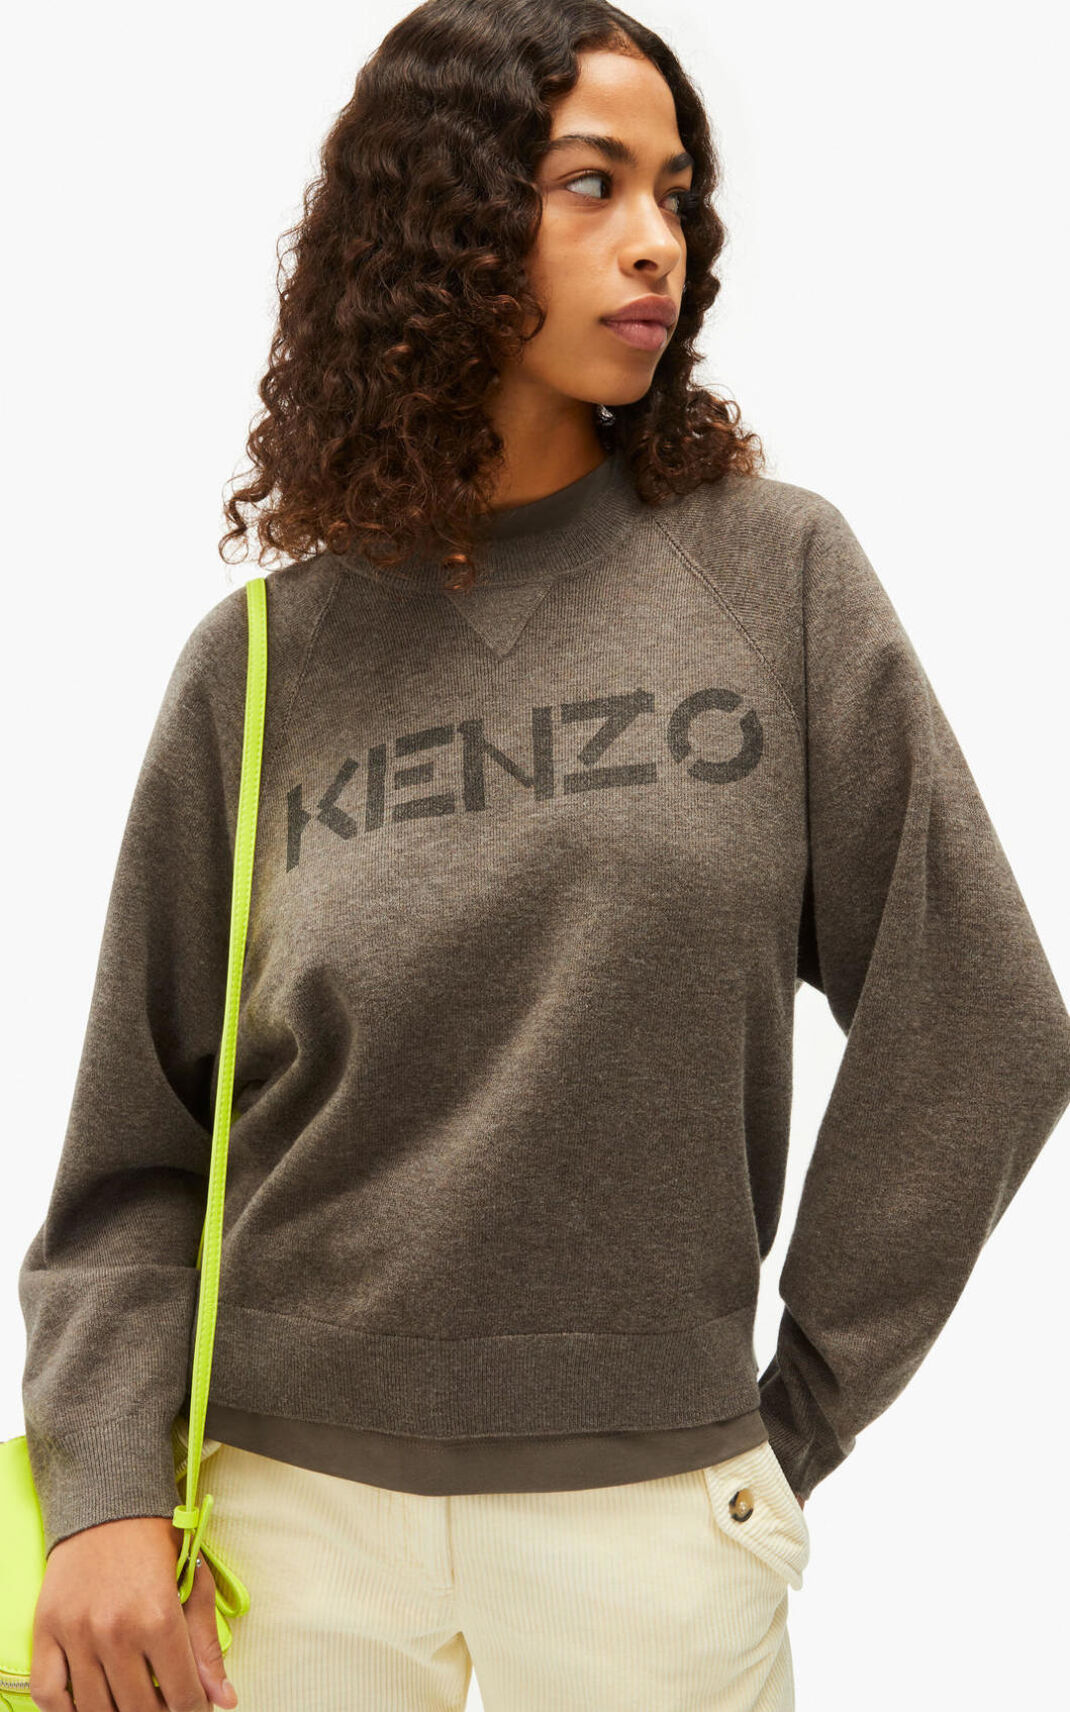 Jerseys Kenzo Logo merino wool Mujer Marrones - SKU.7763140